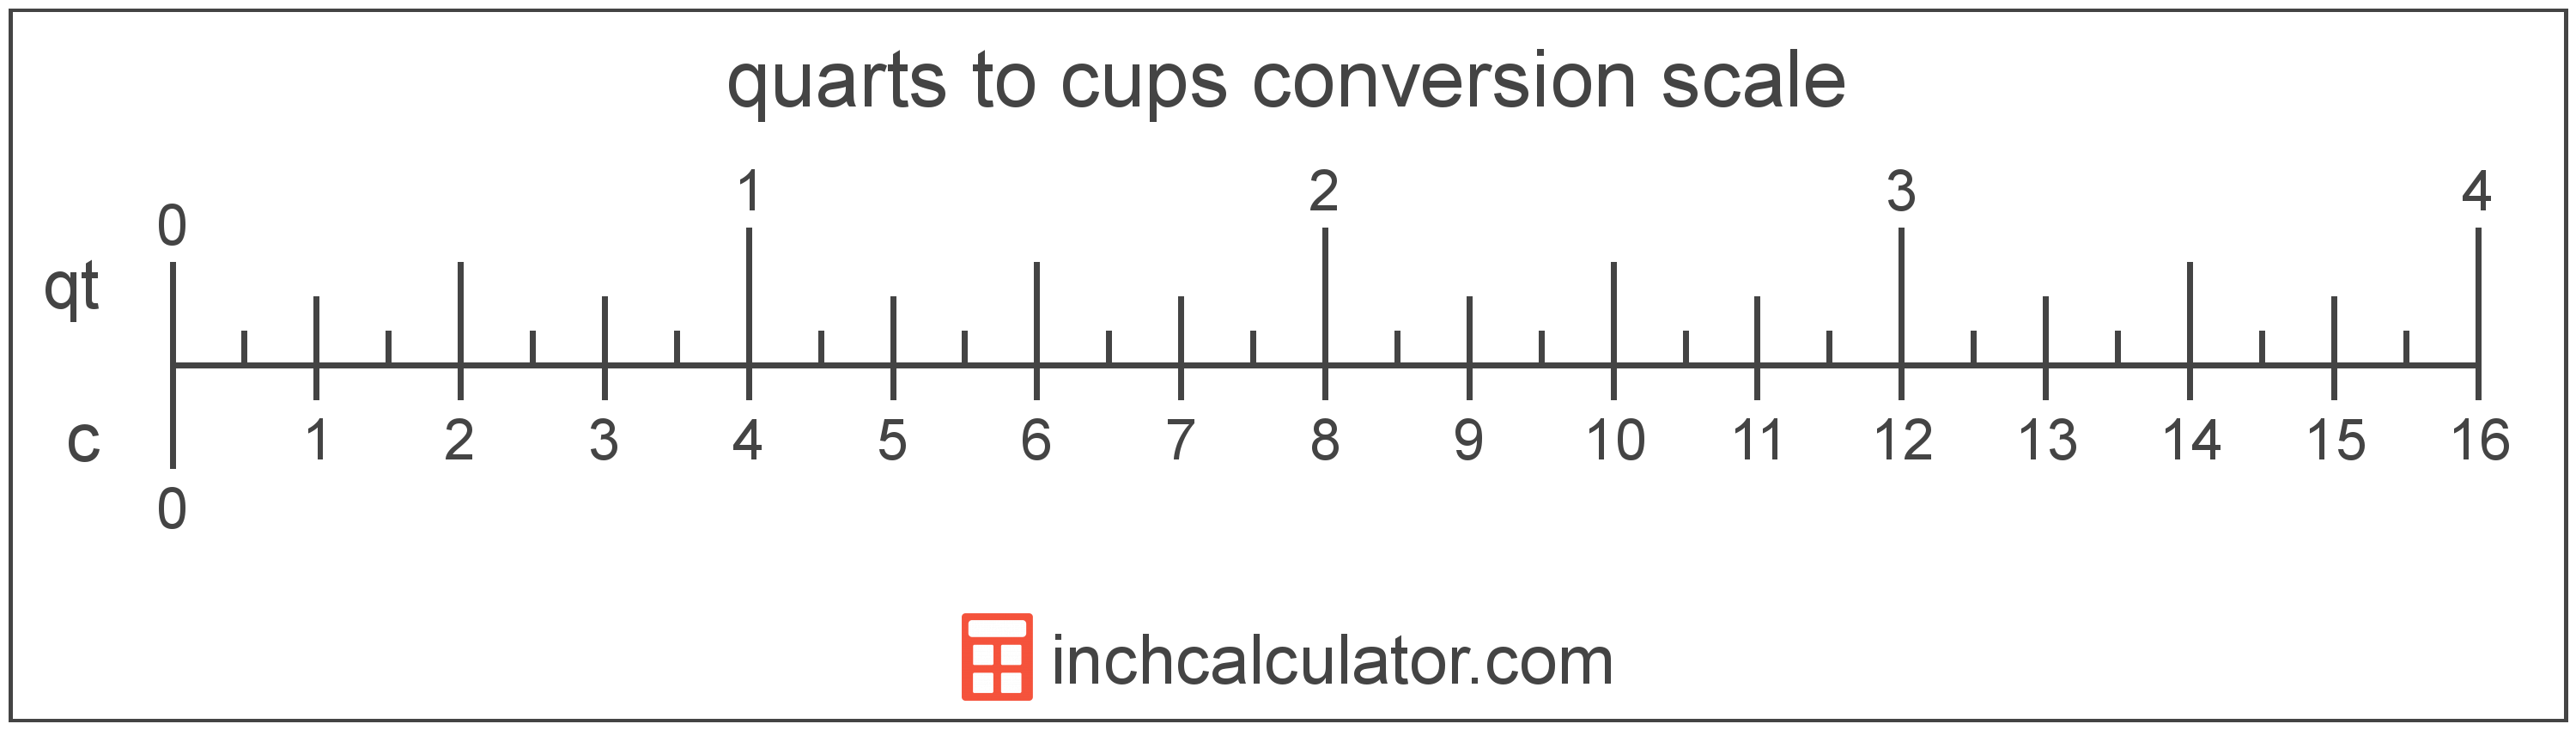 Cups to Quarts Conversion (c to qt) - Inch Calculator